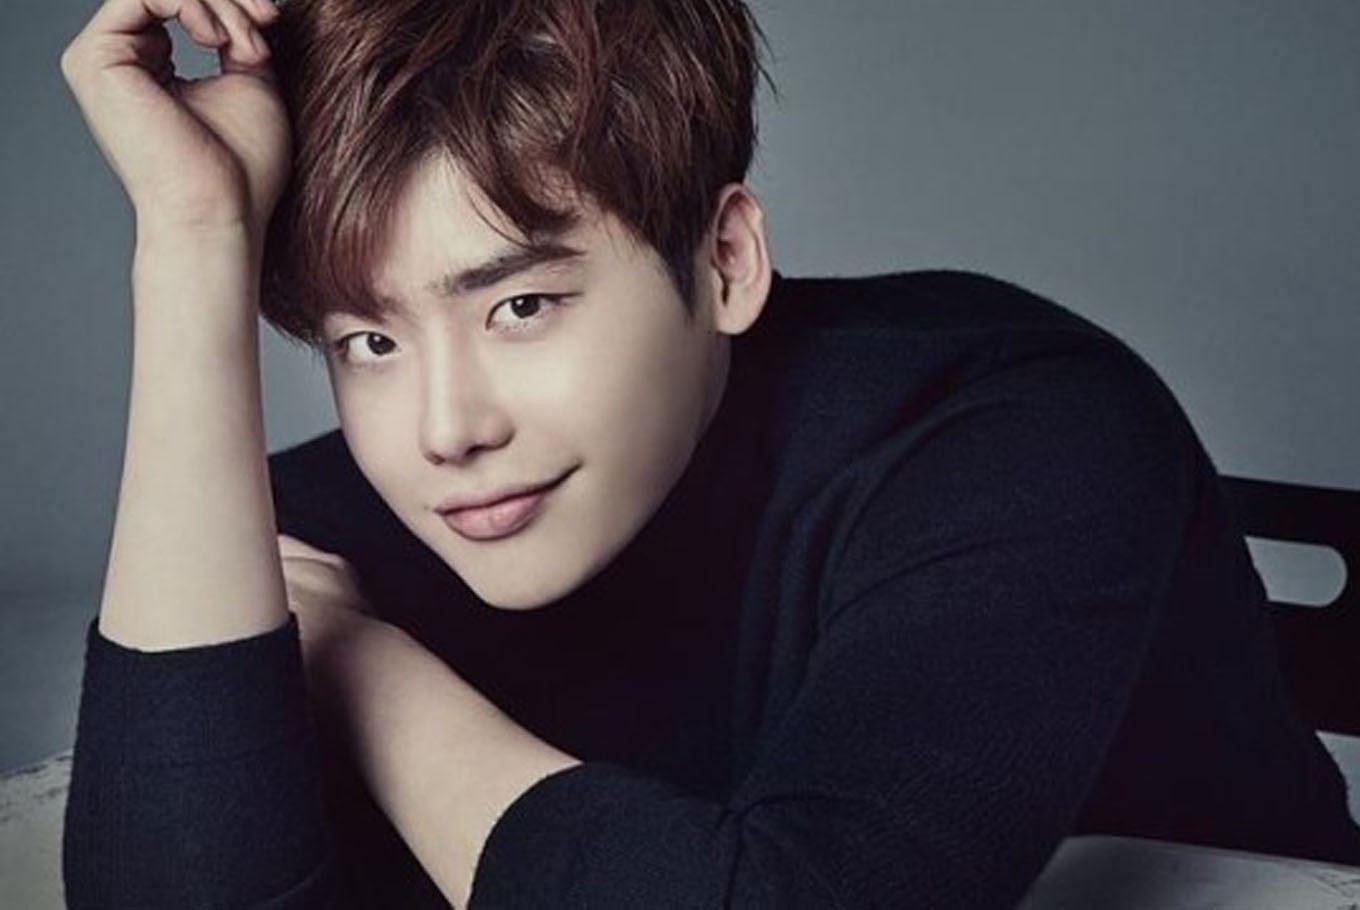 [Actor Spotlight] Lee Jong-seok